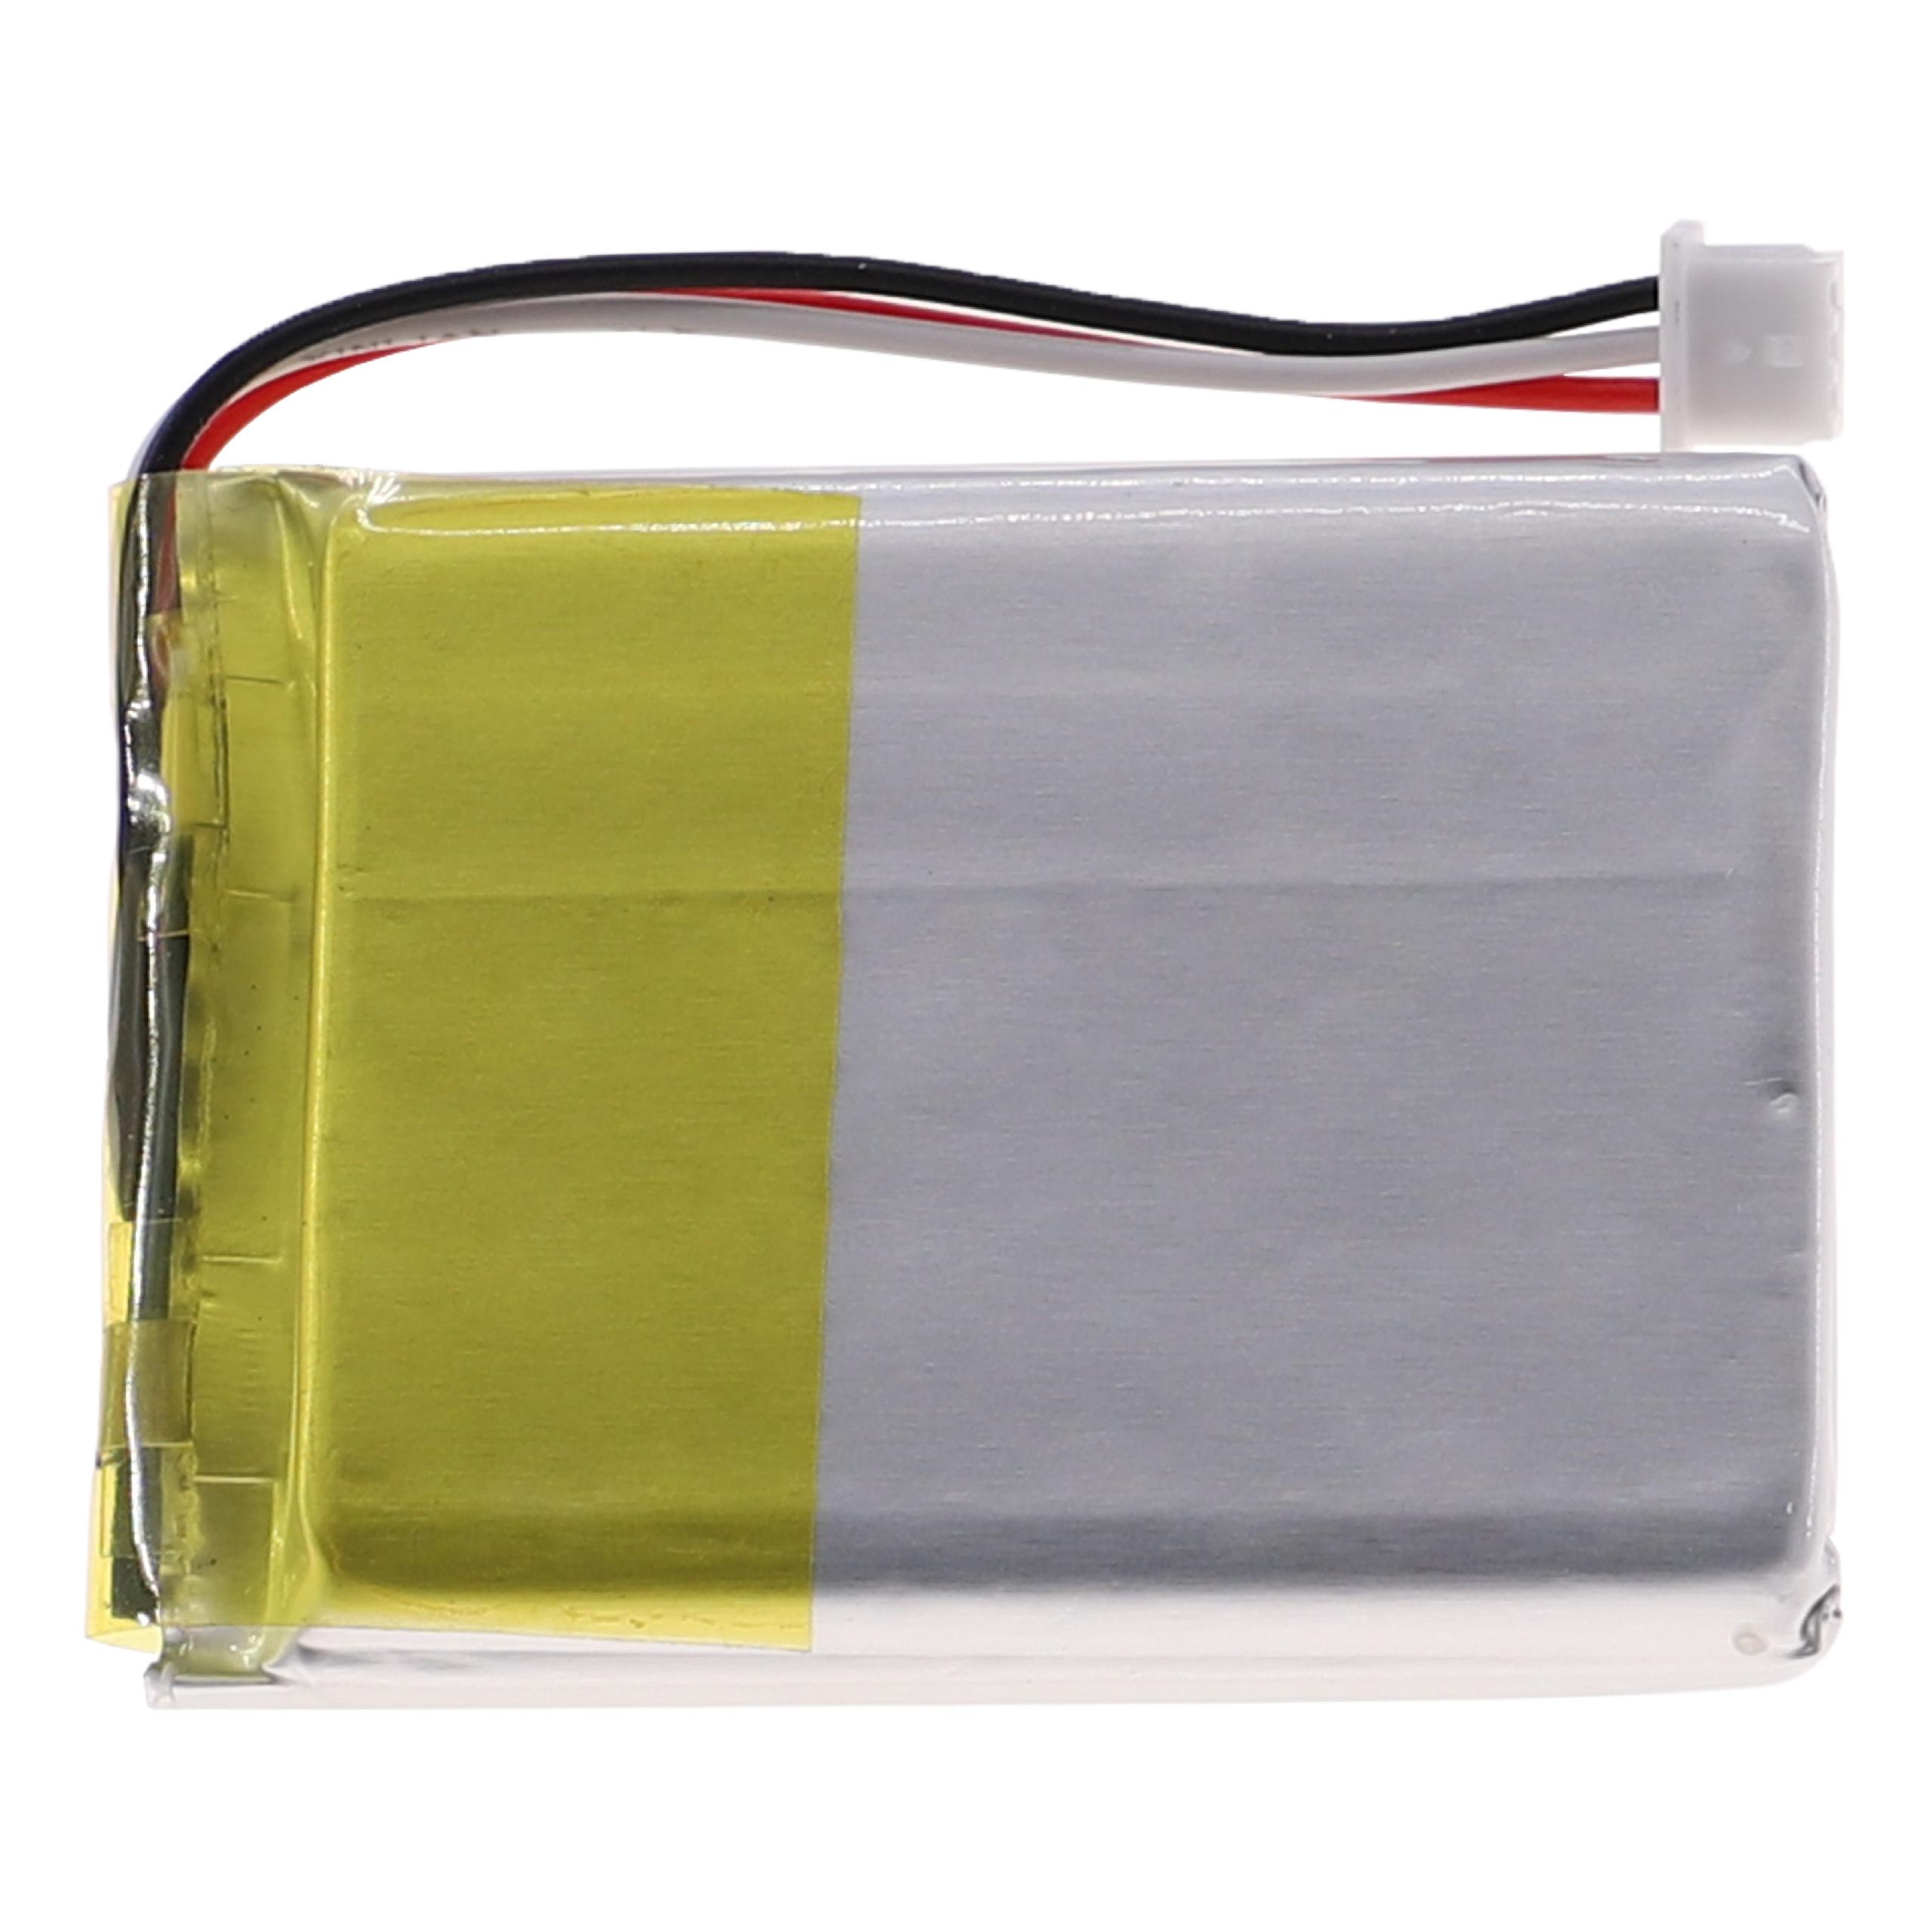 Batteria per telecomando remote controller sostituisce Viper JFC503040 Clifford - 600mAh 3,7V Li-Poly